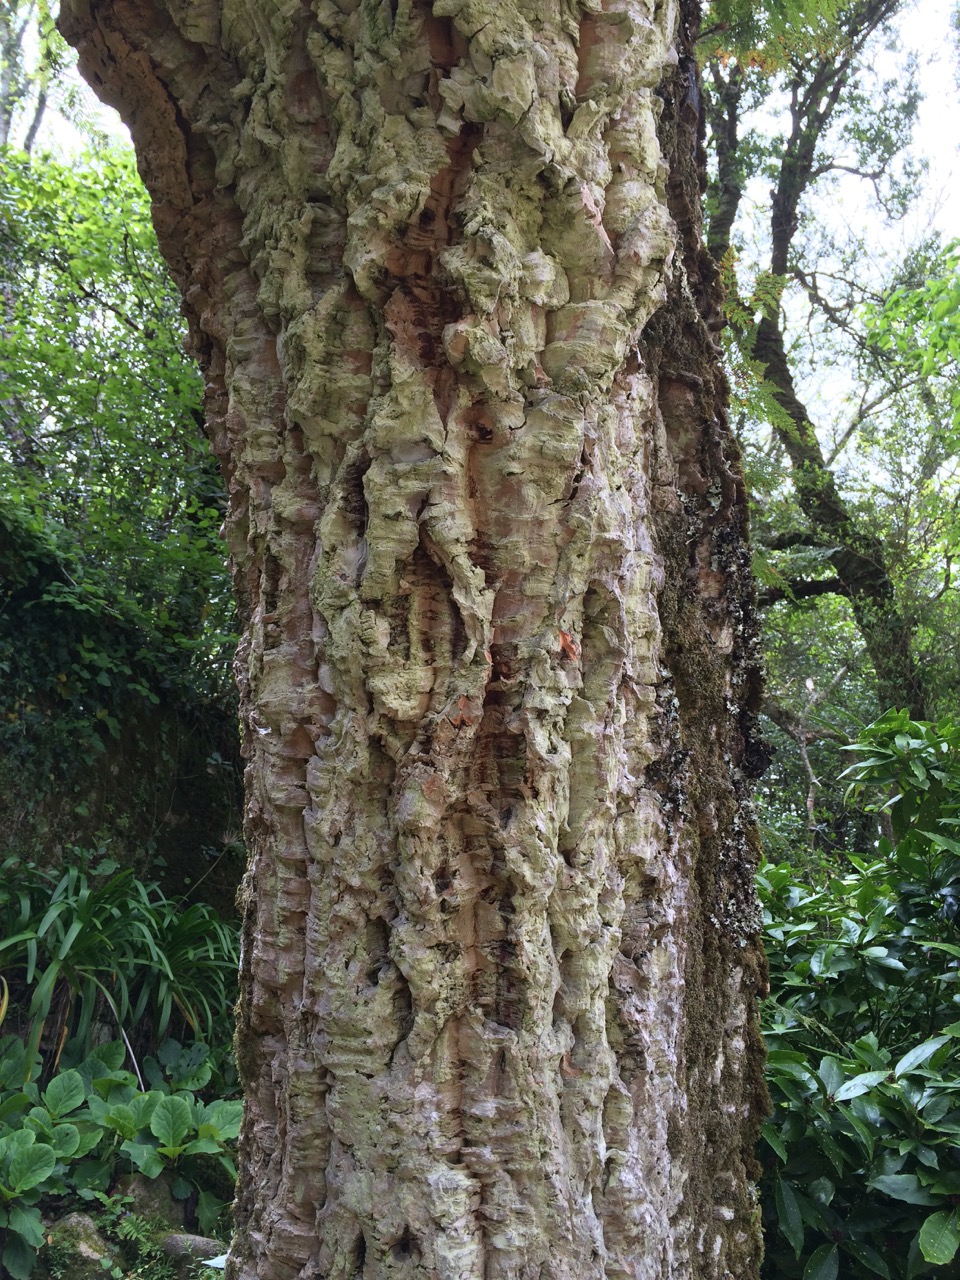 Cork Oak